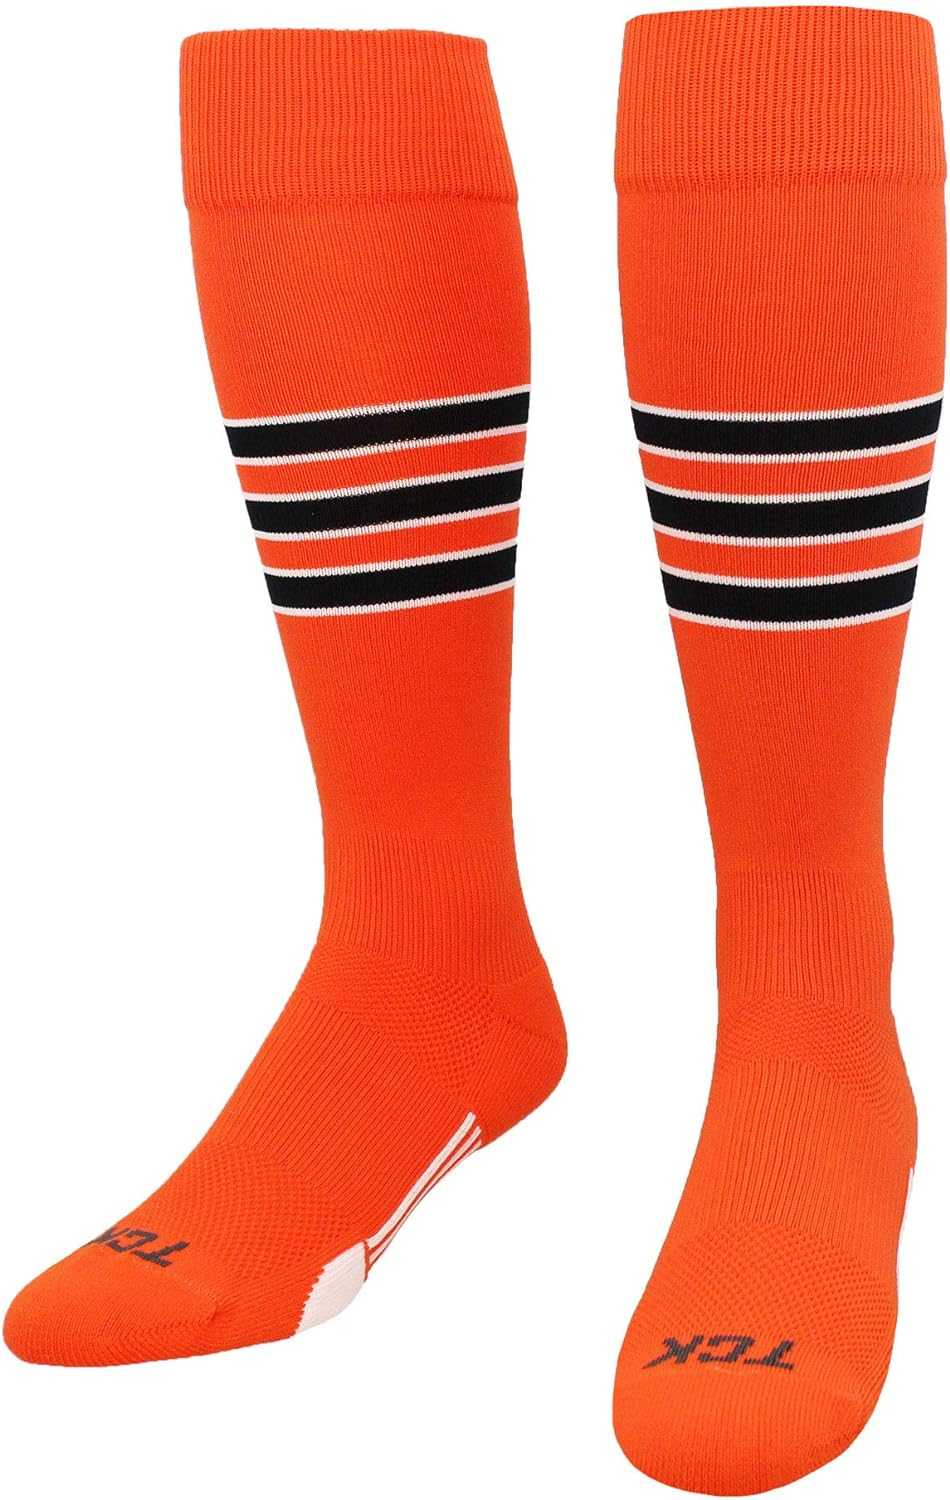 TCK Dugout Knee High Socks - Orange White Black - HIT a Double - 1